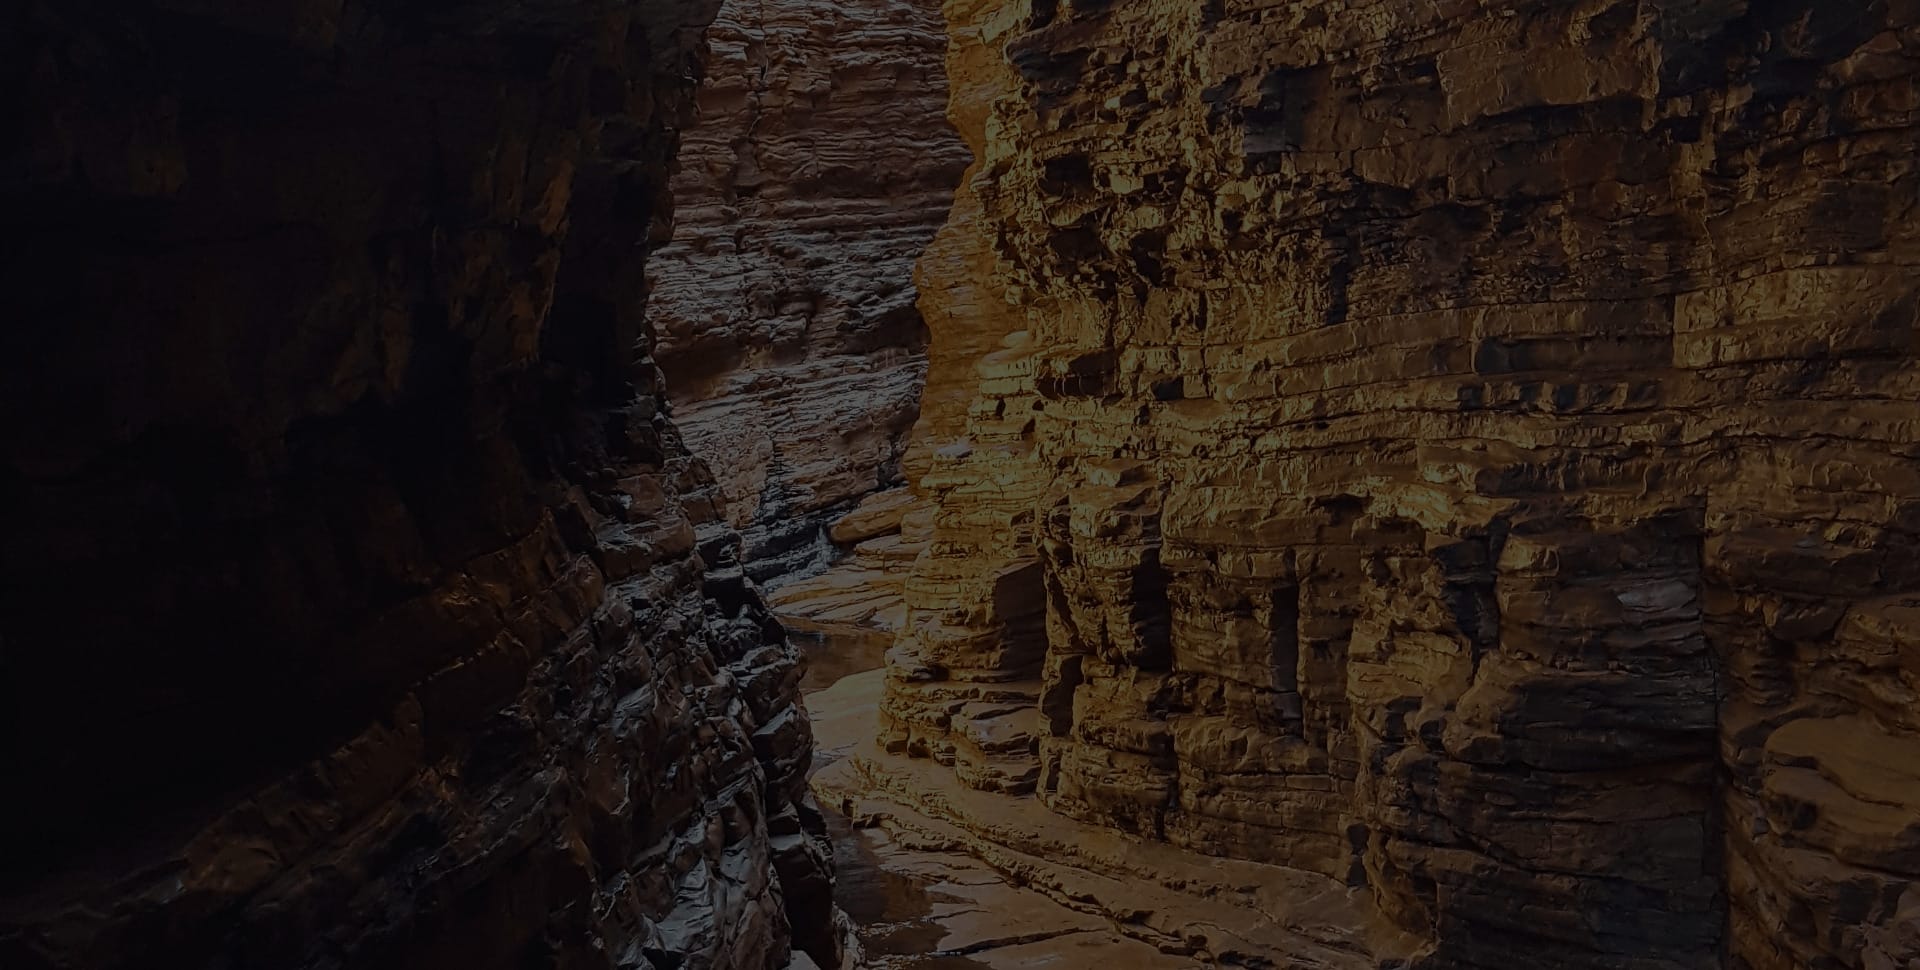 Shadowed canyon with layered rocks